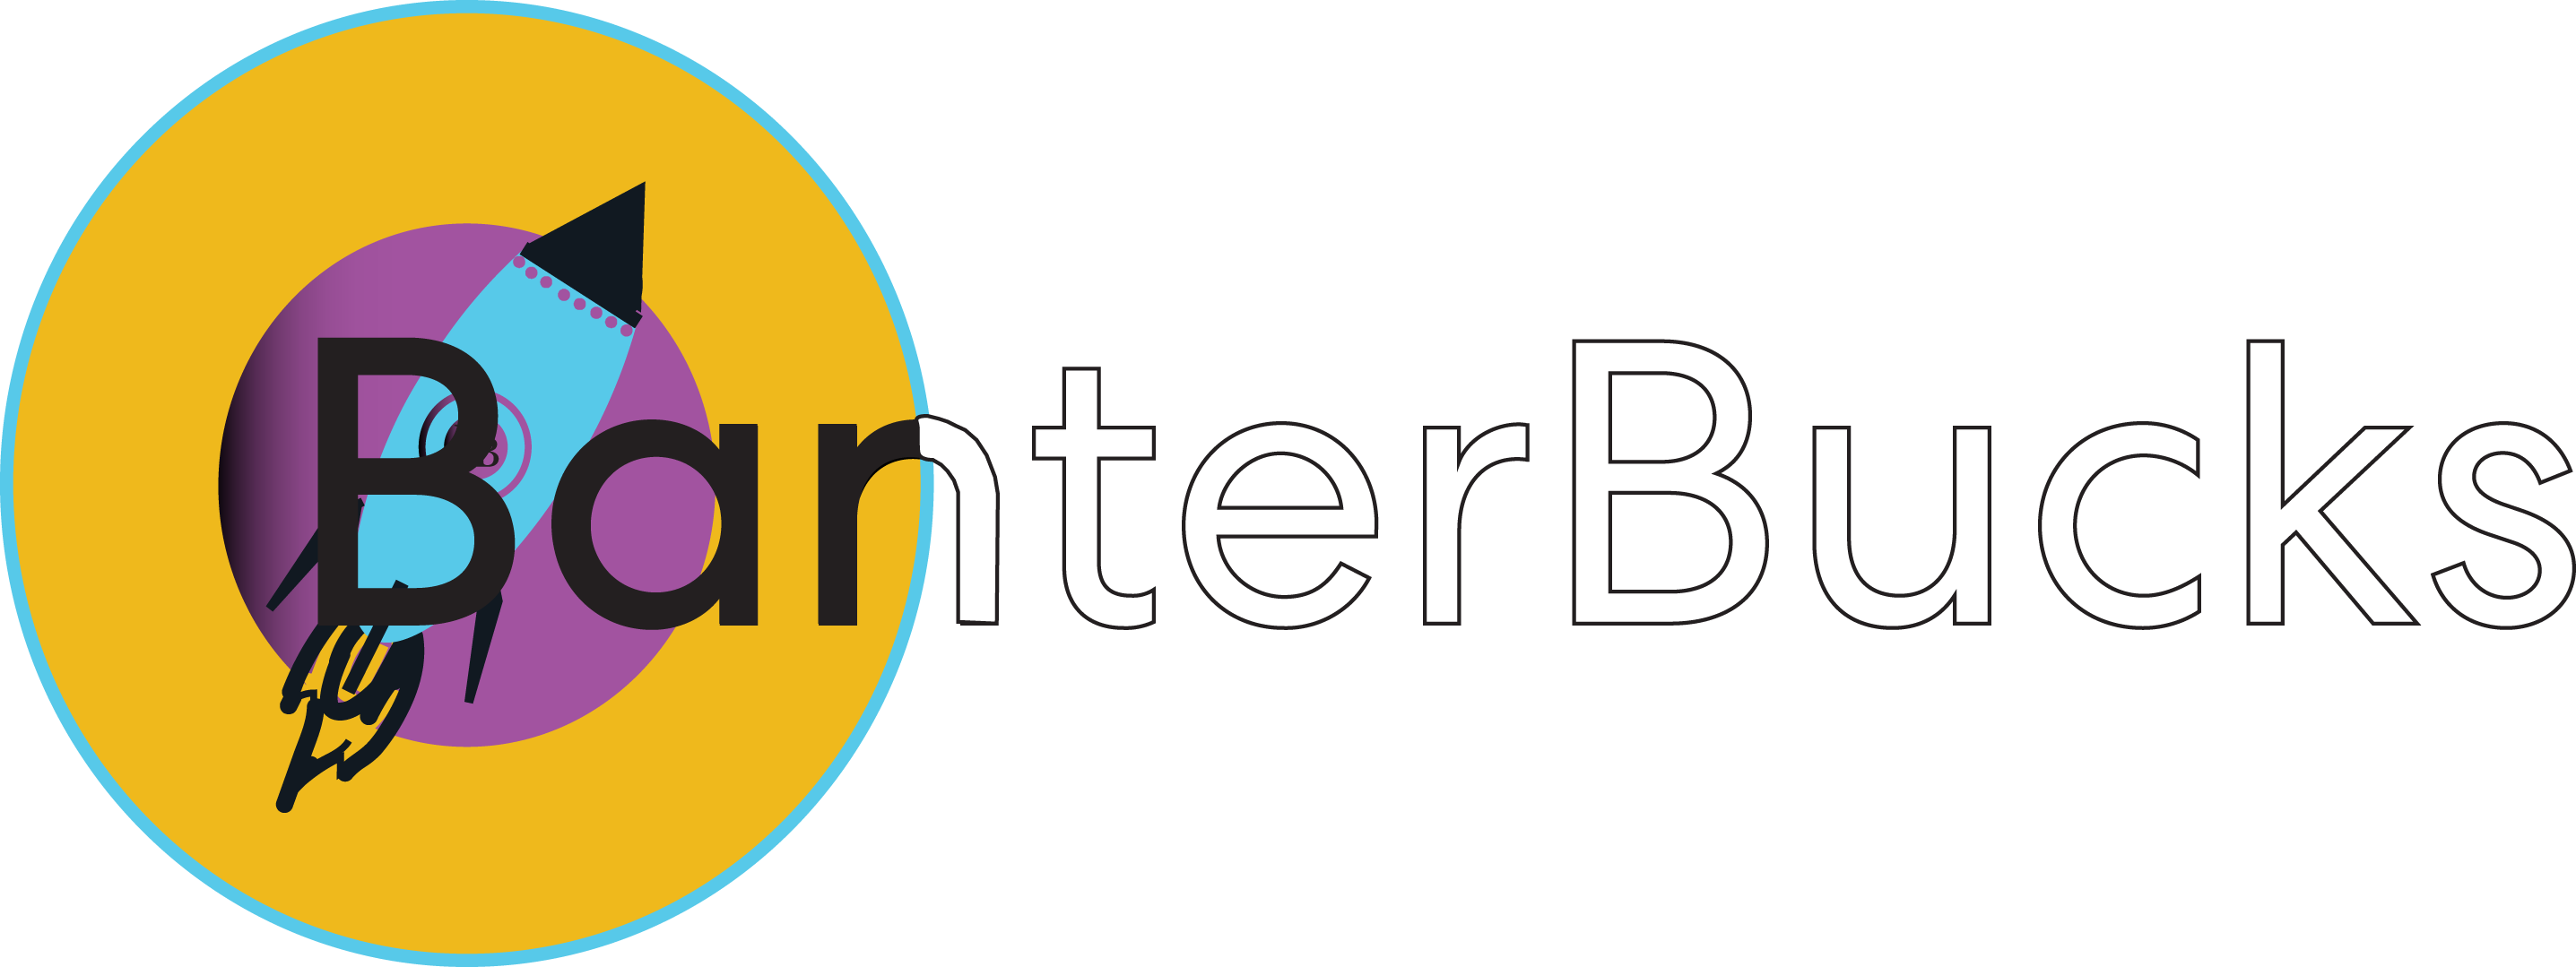 BanterBucks Logo